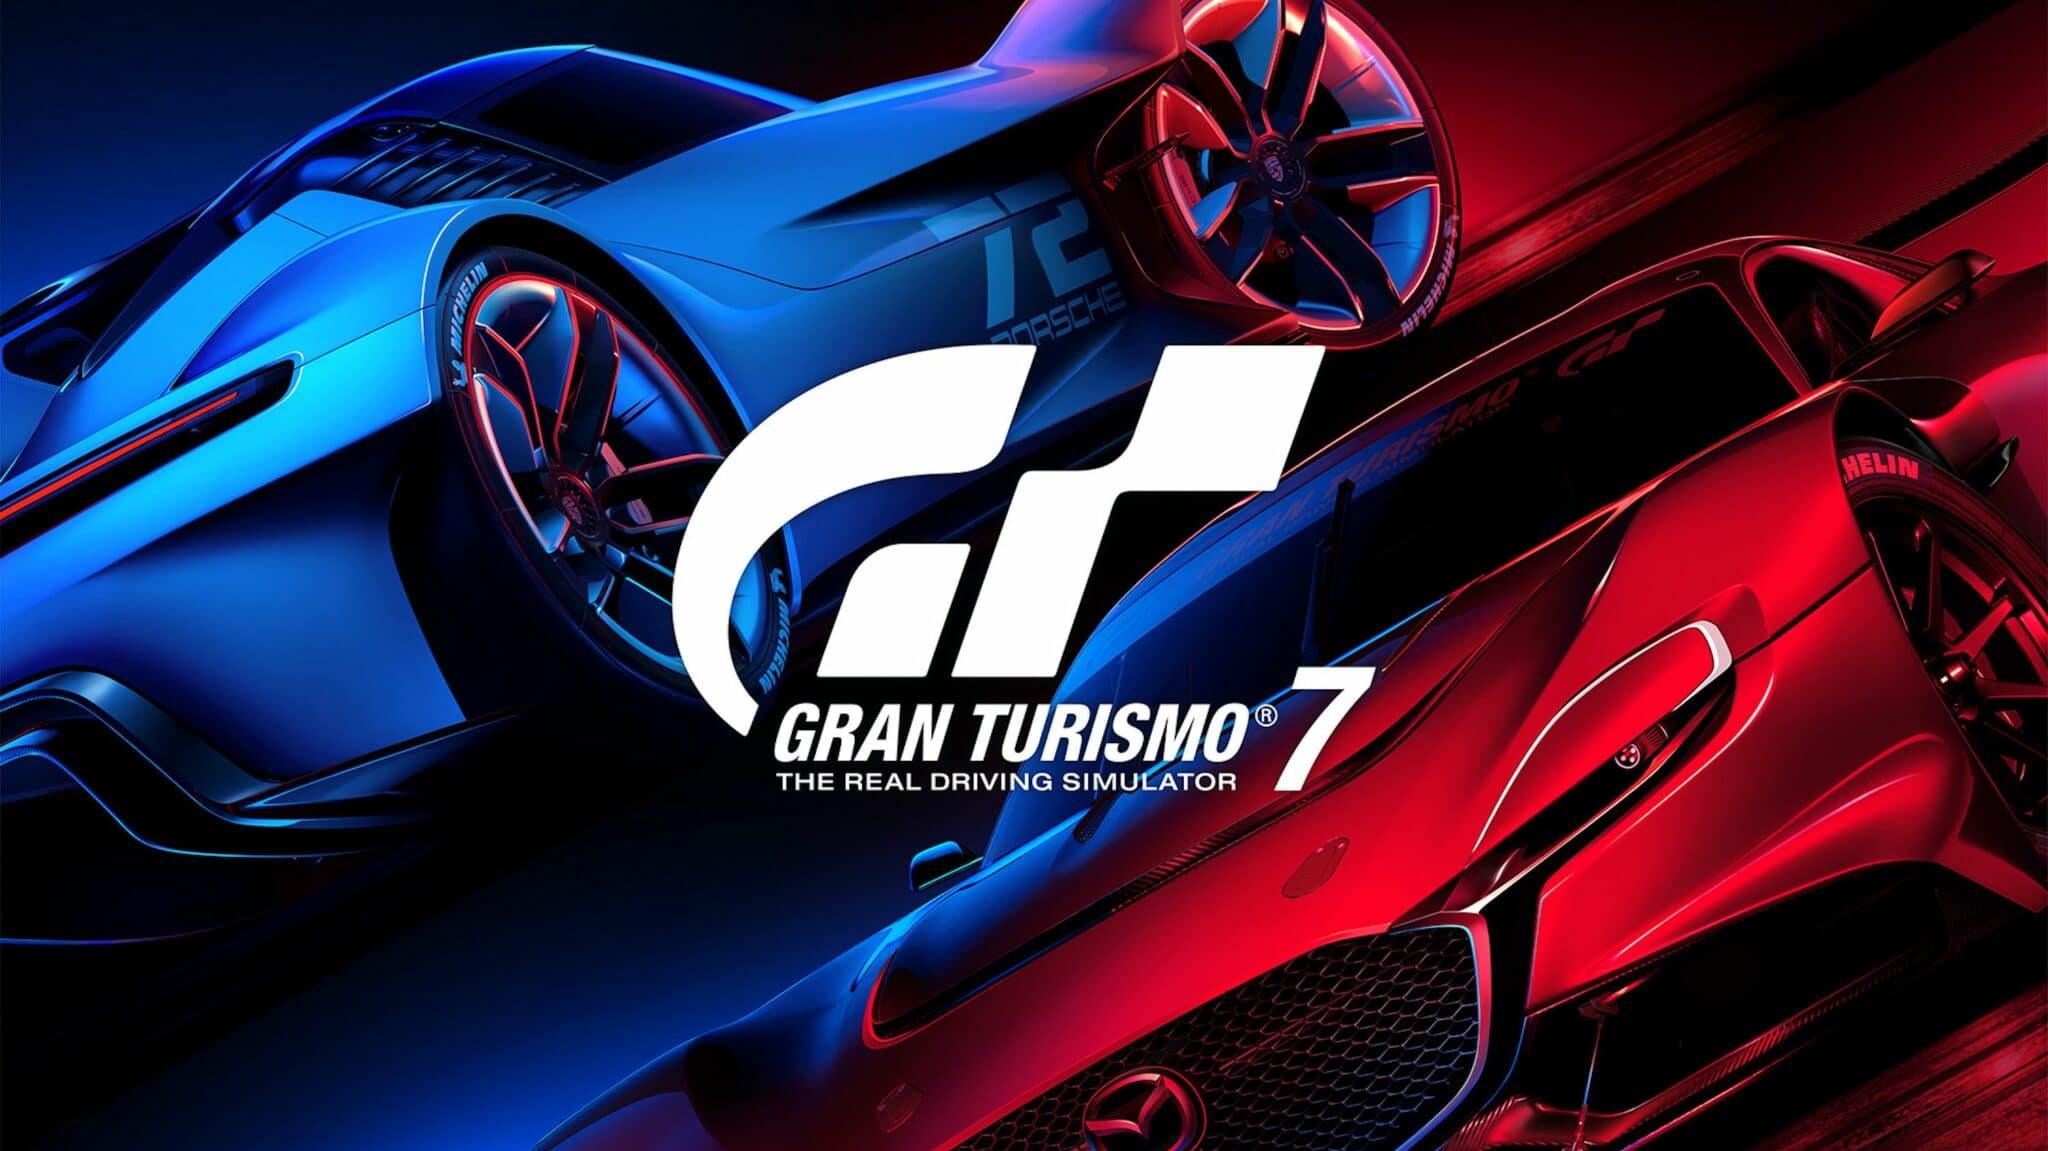 Zuby On X Gran Turismo For Ps5 Psvr 4k Fps